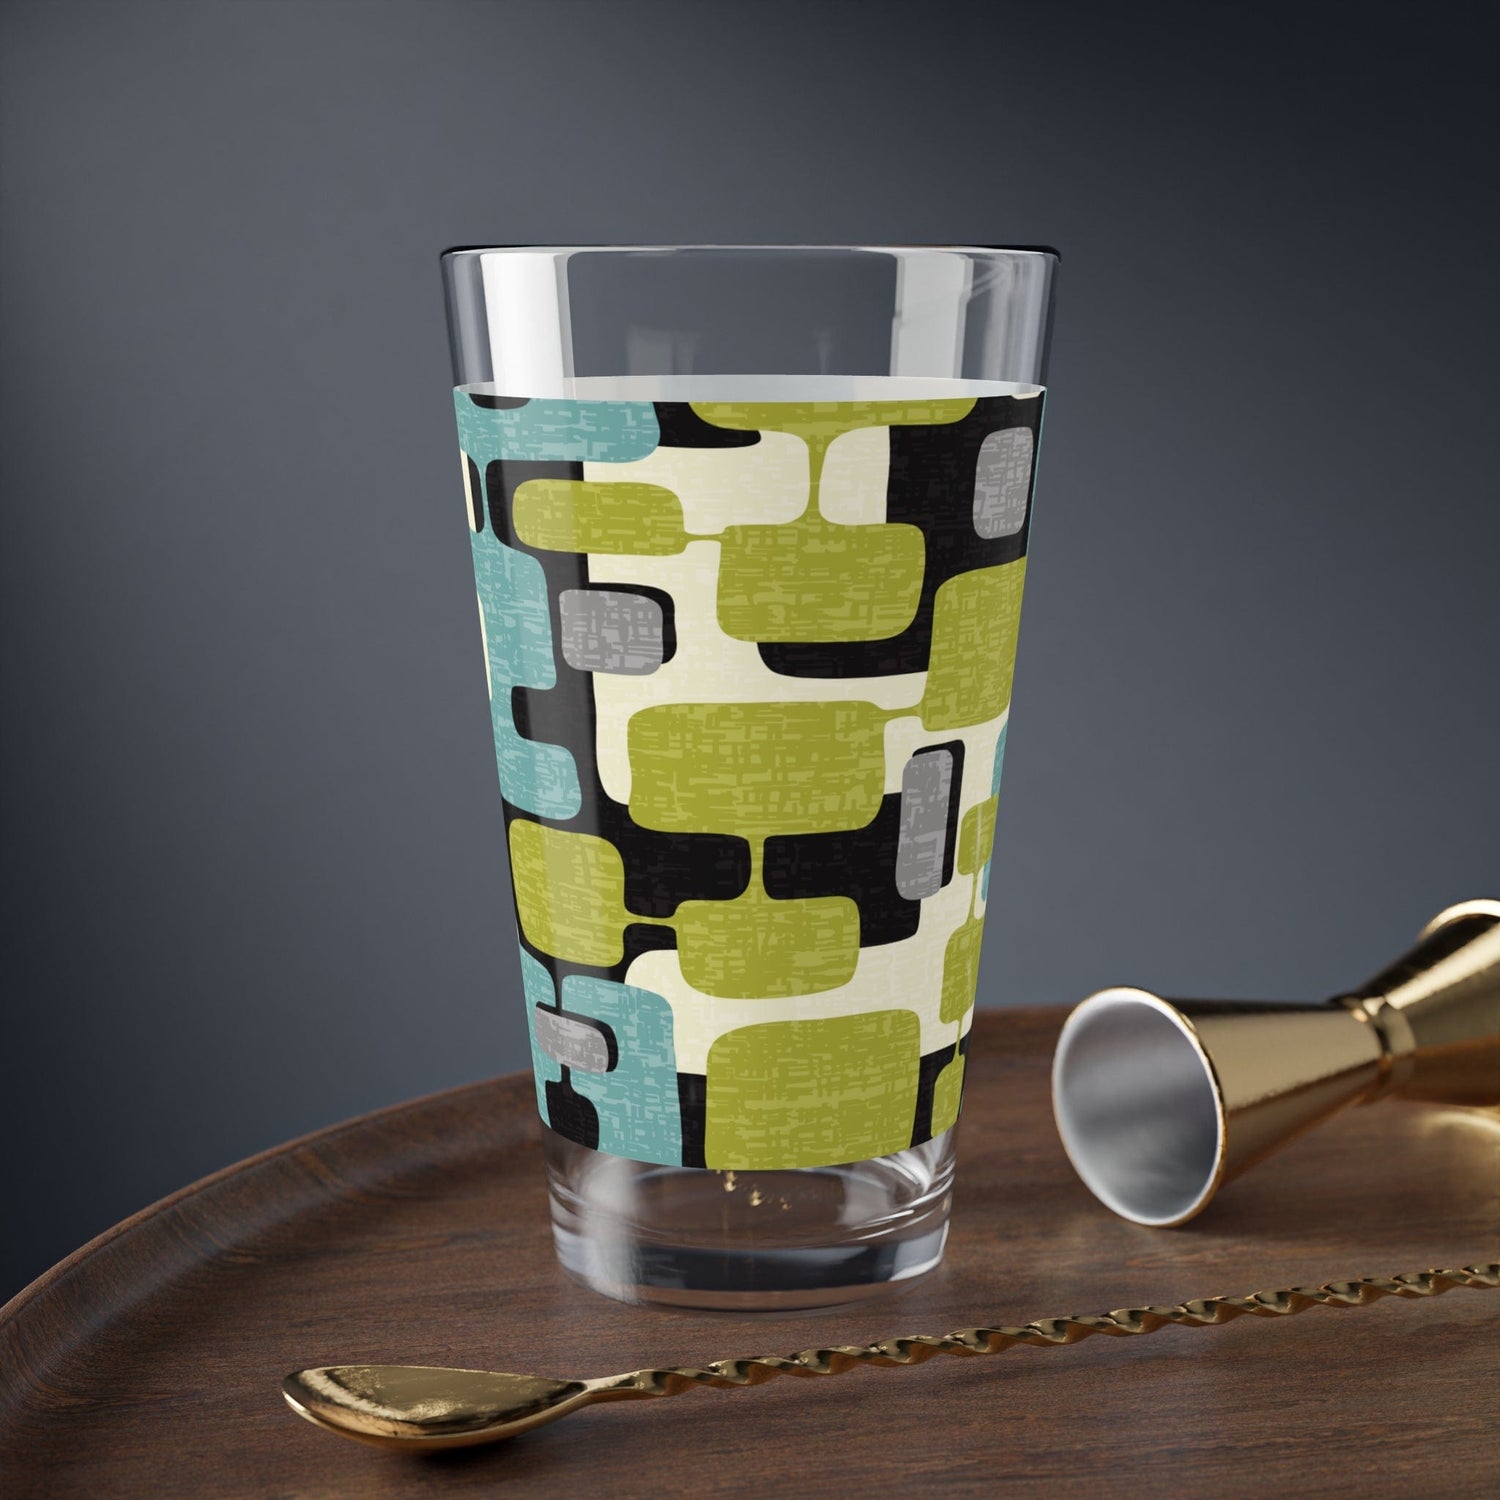 Kate McEnroe New York Mid Century Modern Cocktail Glass, Retro Drinkware, Geometric Pint GlassMixing Glasses16656397560836183106